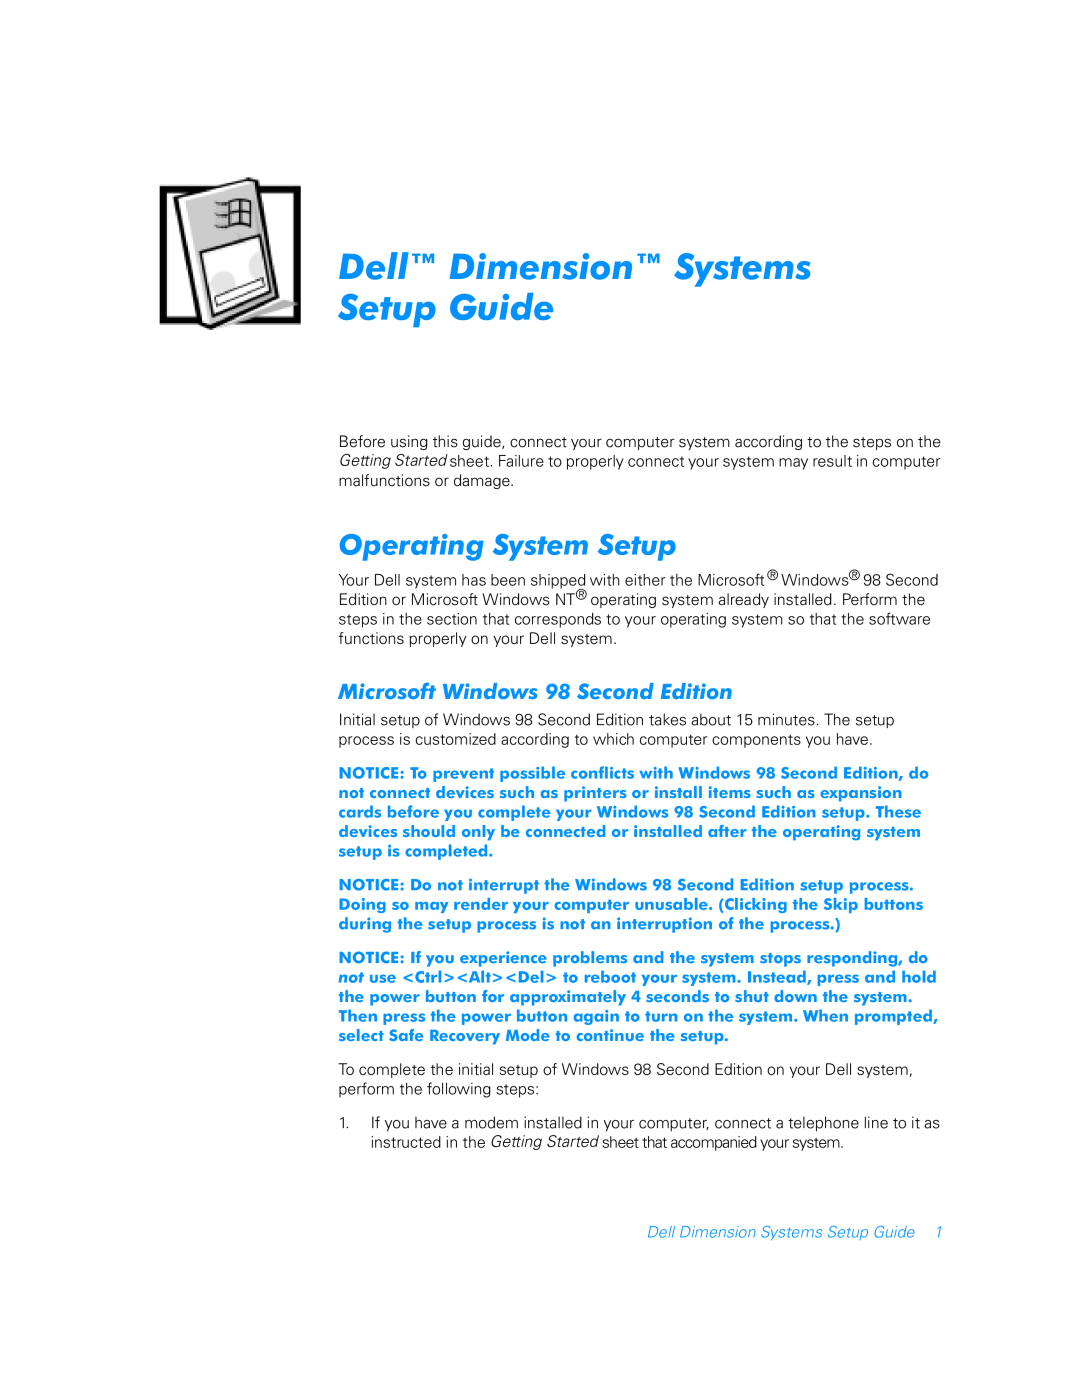 Dell Lxxxc manual 2SHUDWLQJ6\VWHP6HWXS, 0LFURVRIWLQGRZV6HFRQGGLWLRQ, Gxulqjwkhvhwxssurfhvvlvqrwdqlqwhuuxswlrqriwkhsurfhvv 